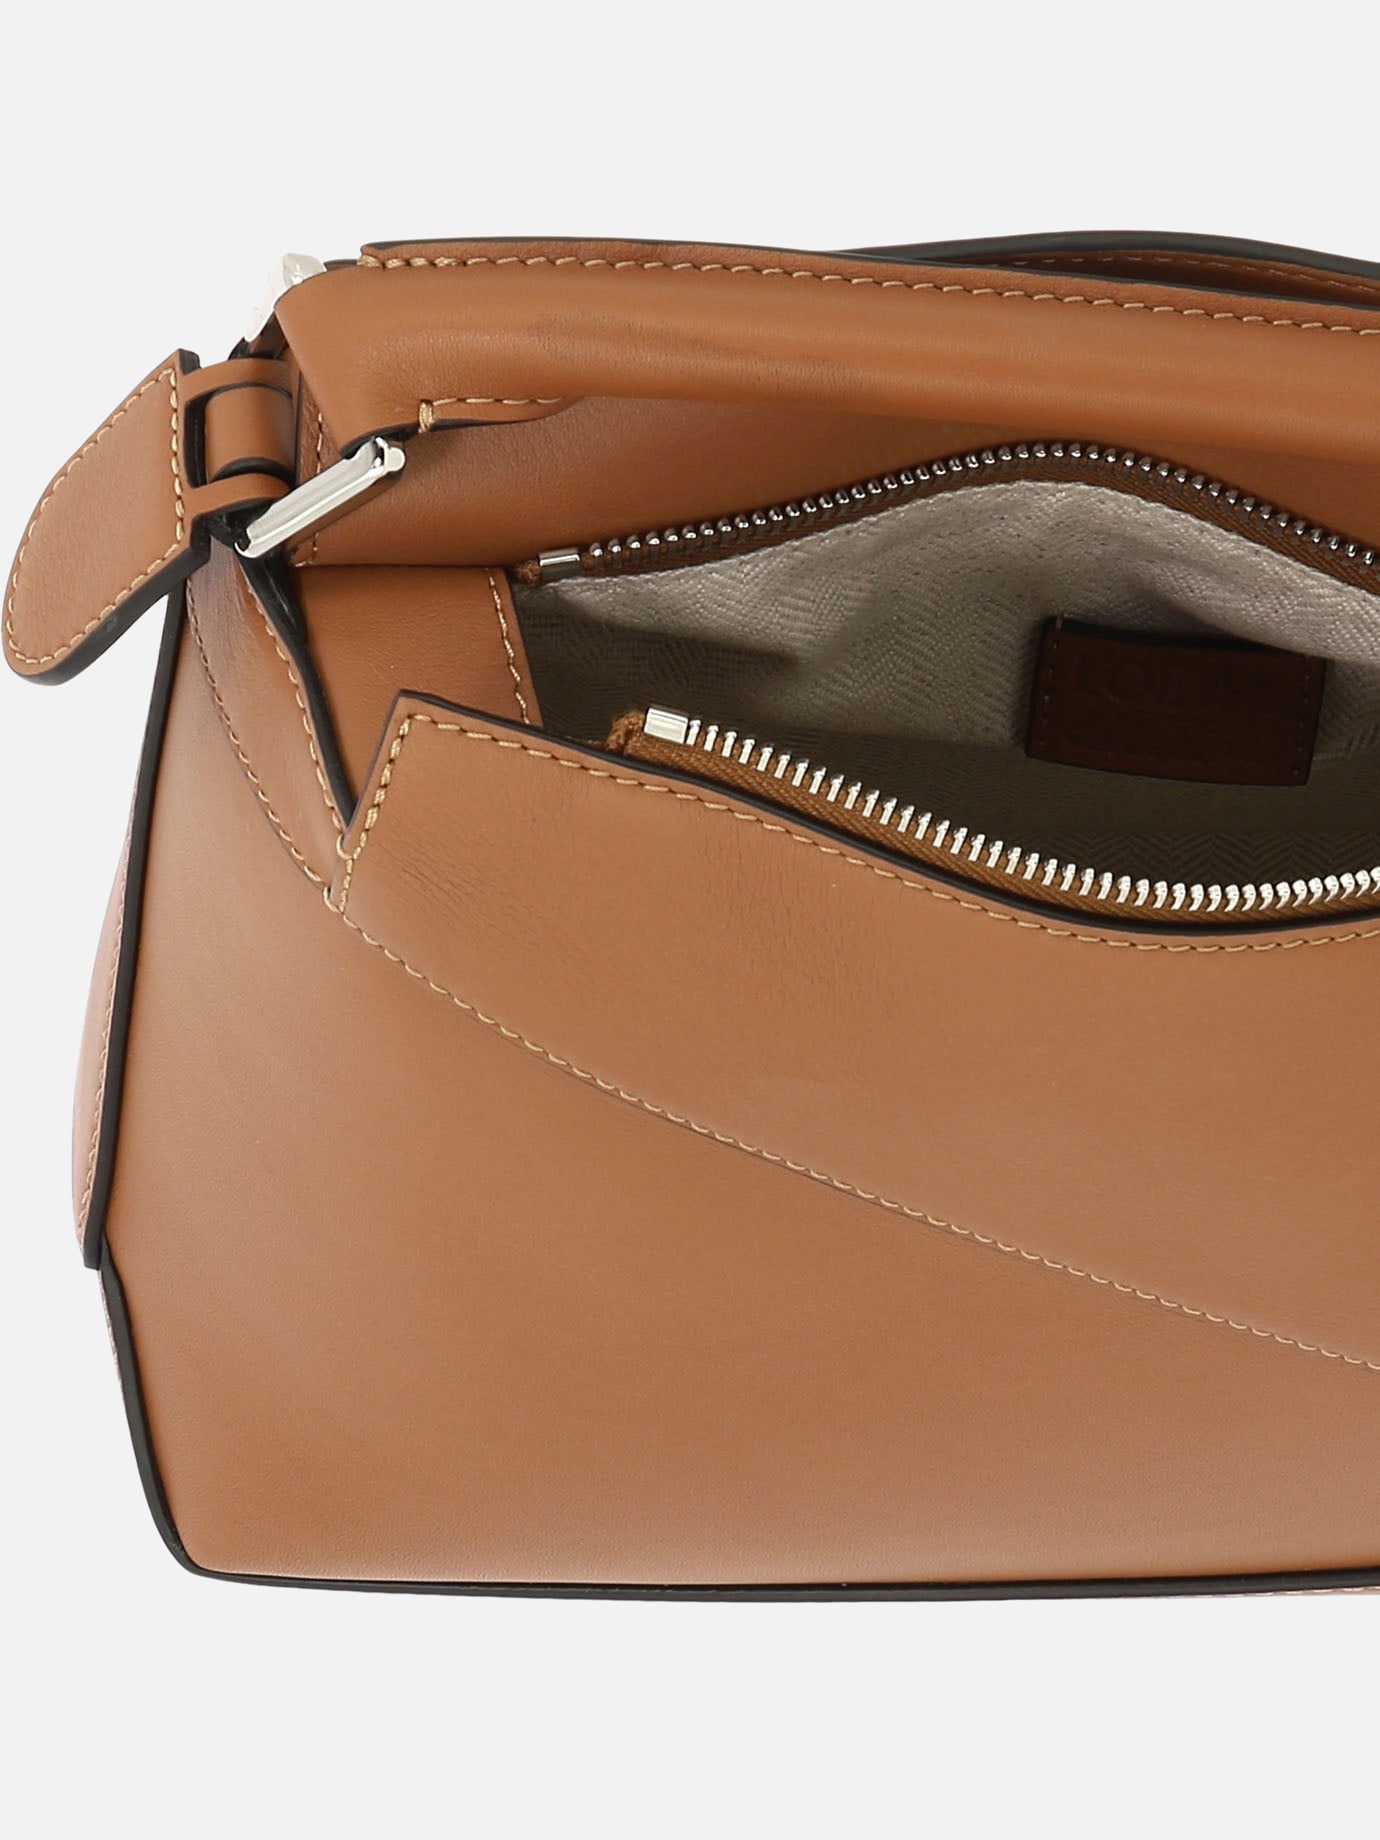 "Small Puzzle" handbag